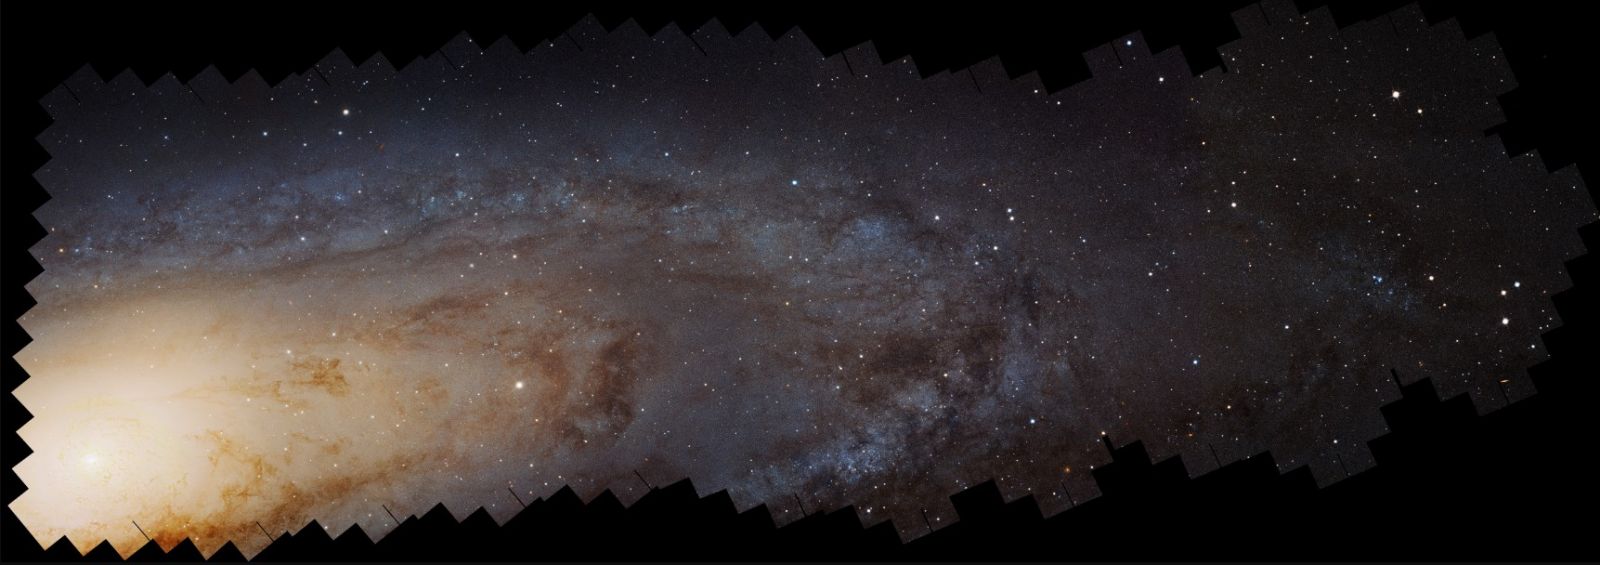 Giant Black Hole Pair Photobombs Andromeda Galaxy